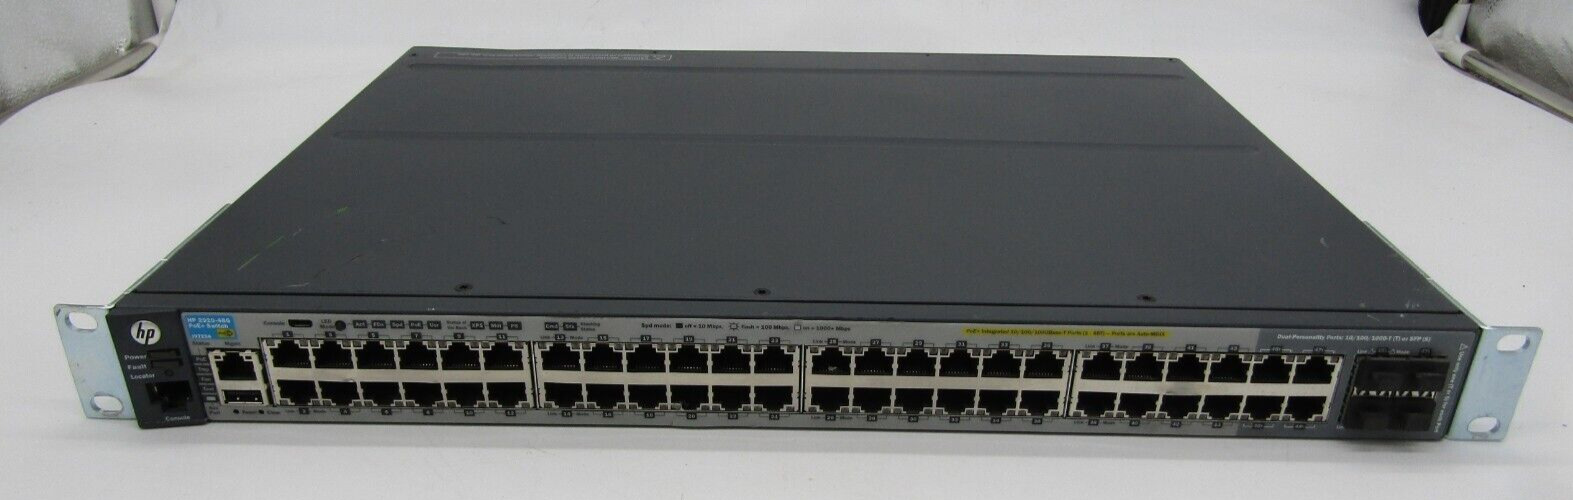 HP J9729A 2920-48G-POE+ 49 Port Gigabit PoE+ Switch